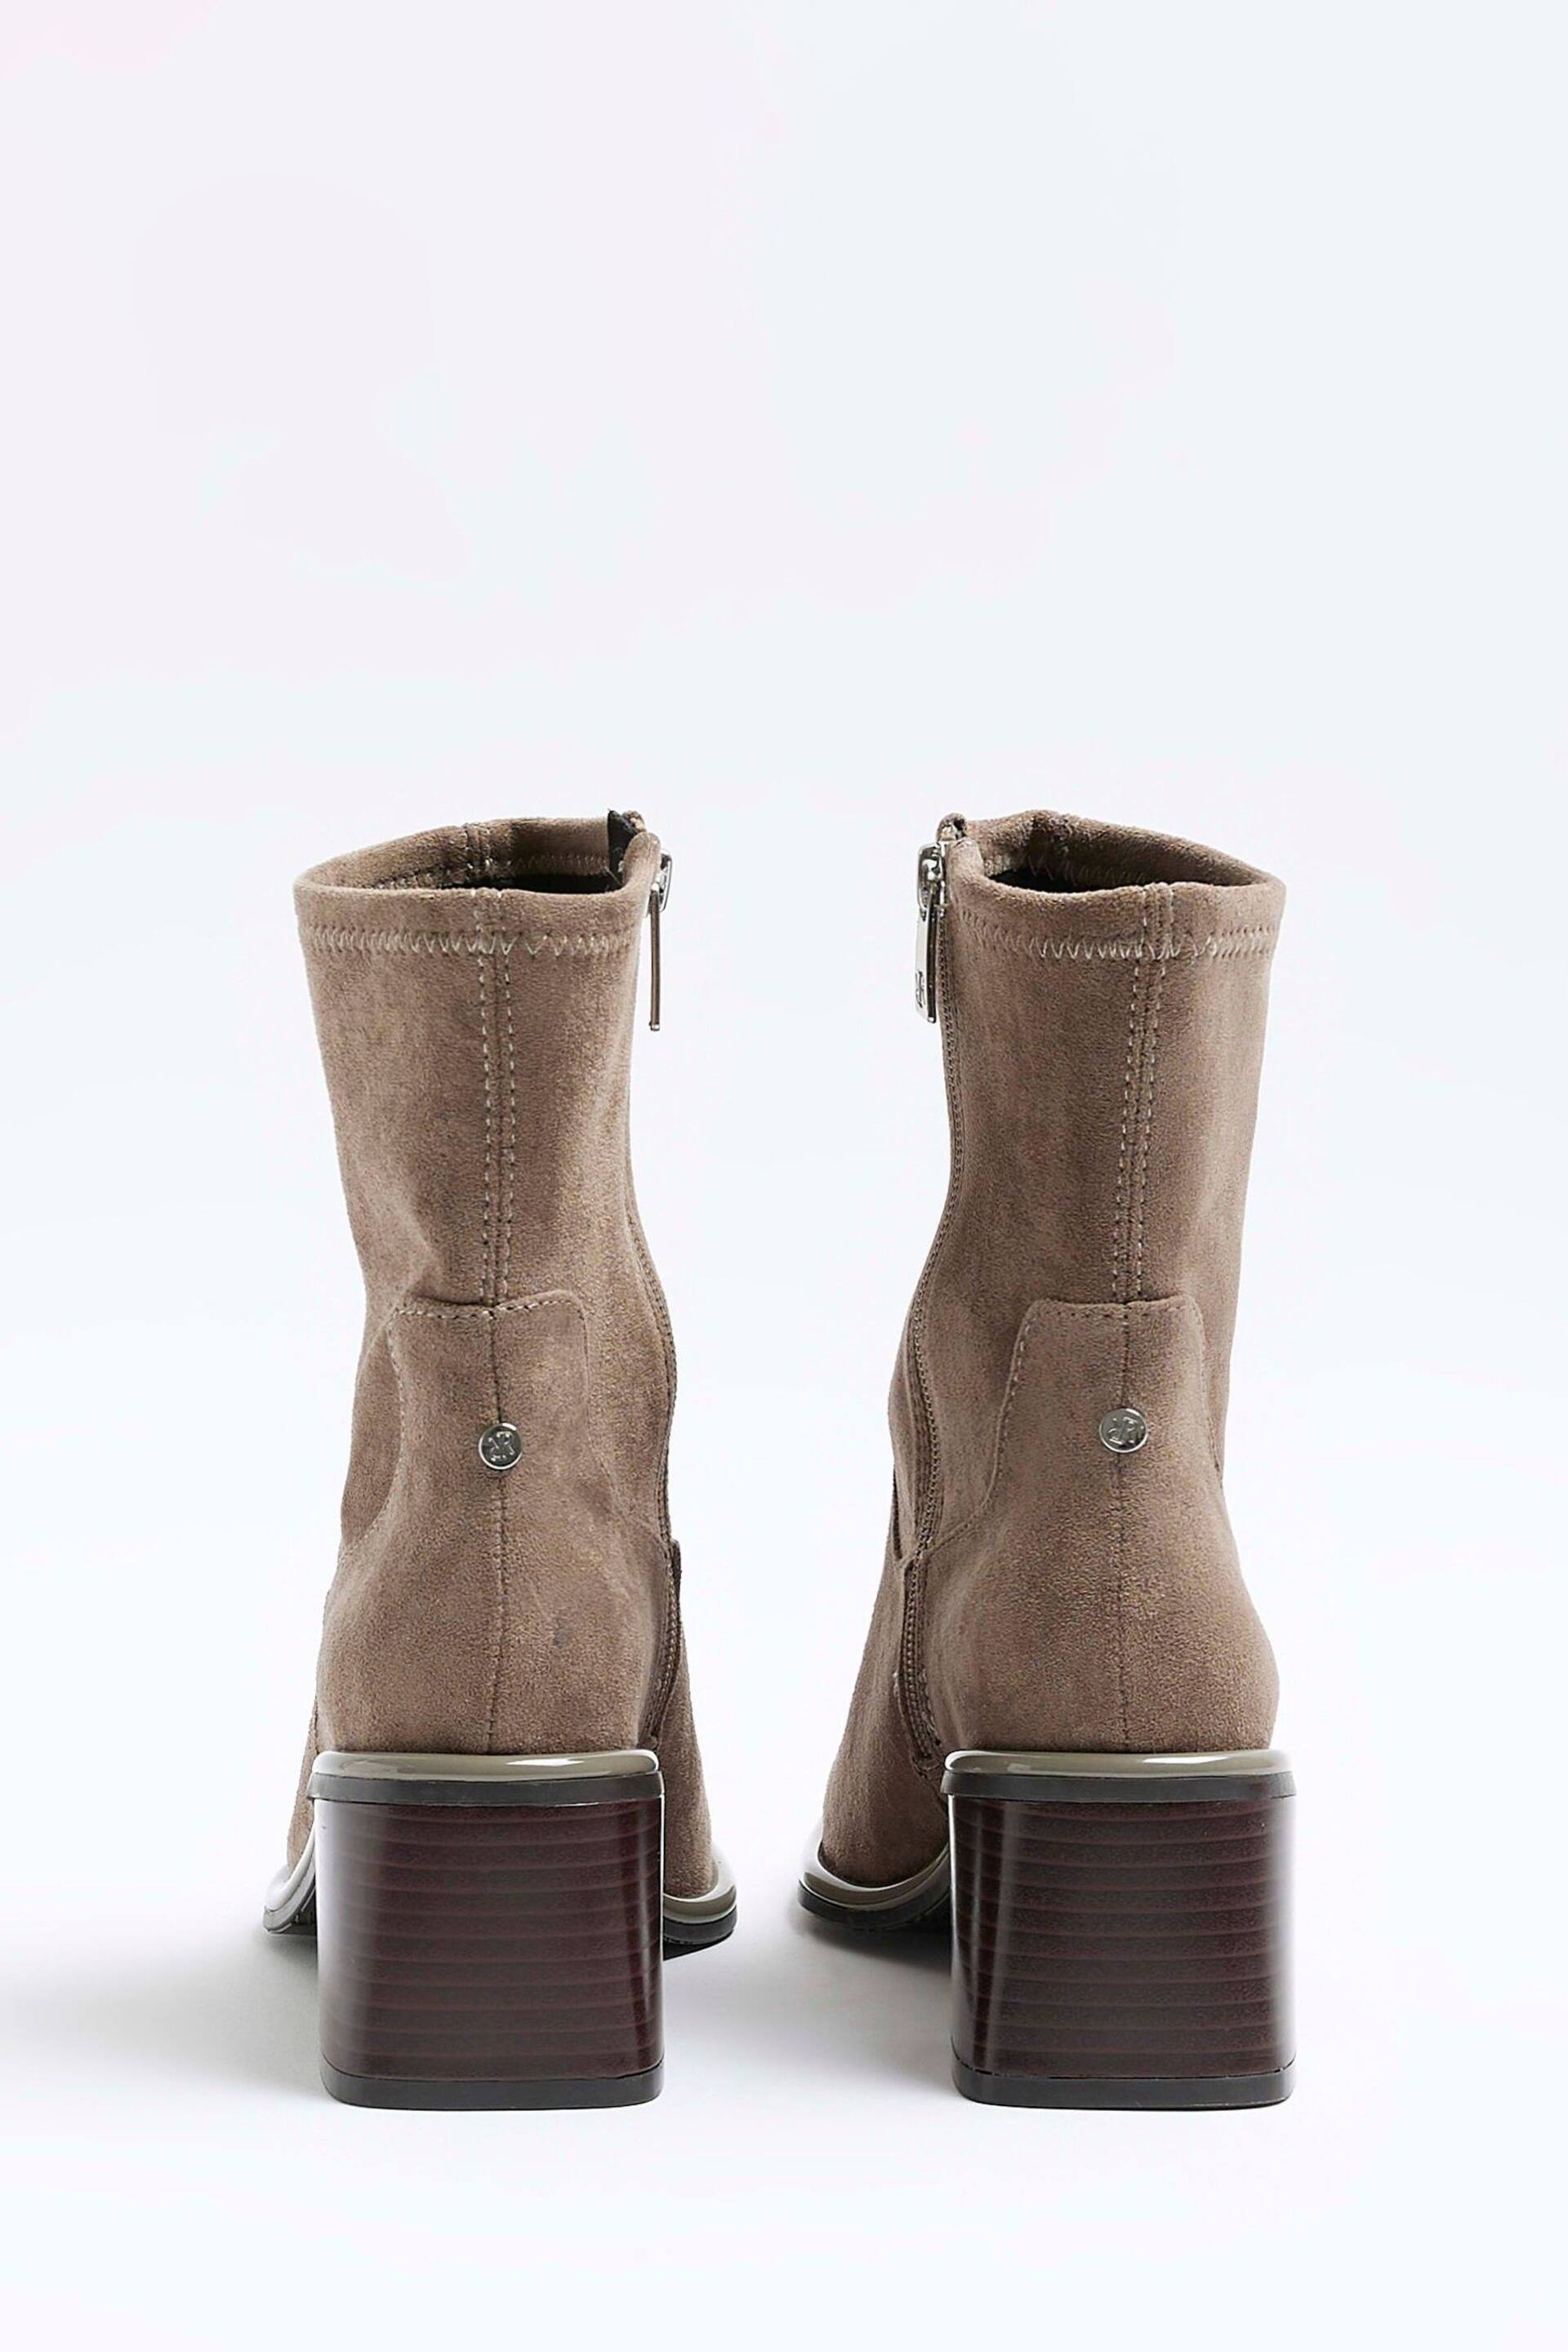 River Island Grey Wide Fit Block Heel Socks Boots - Image 3 of 4